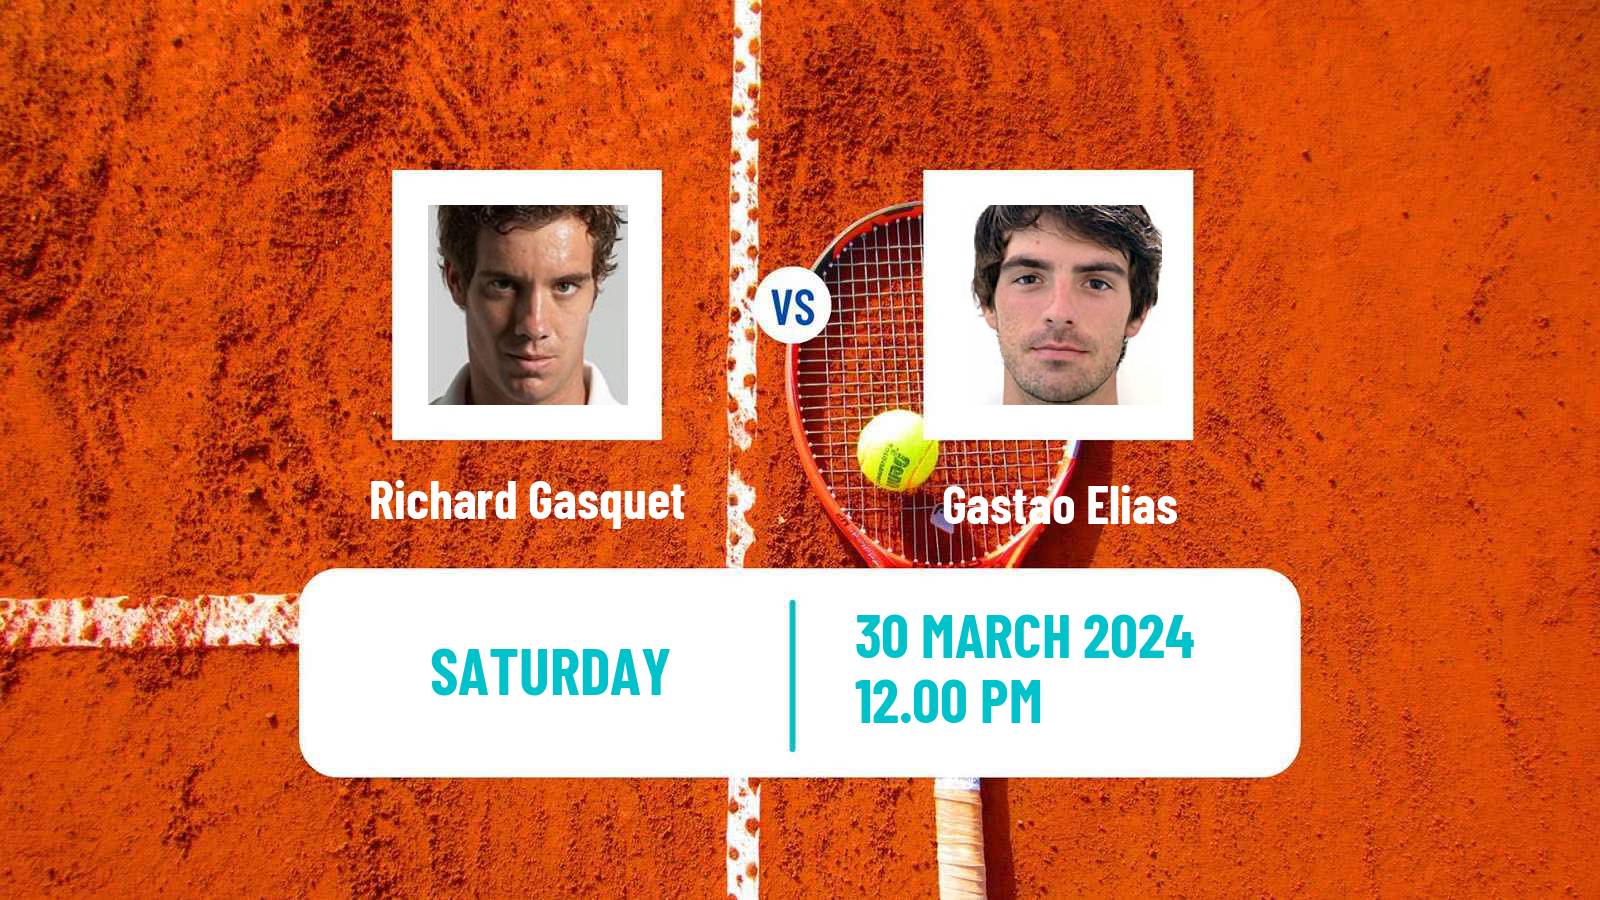 Tennis ATP Estoril Richard Gasquet - Gastao Elias